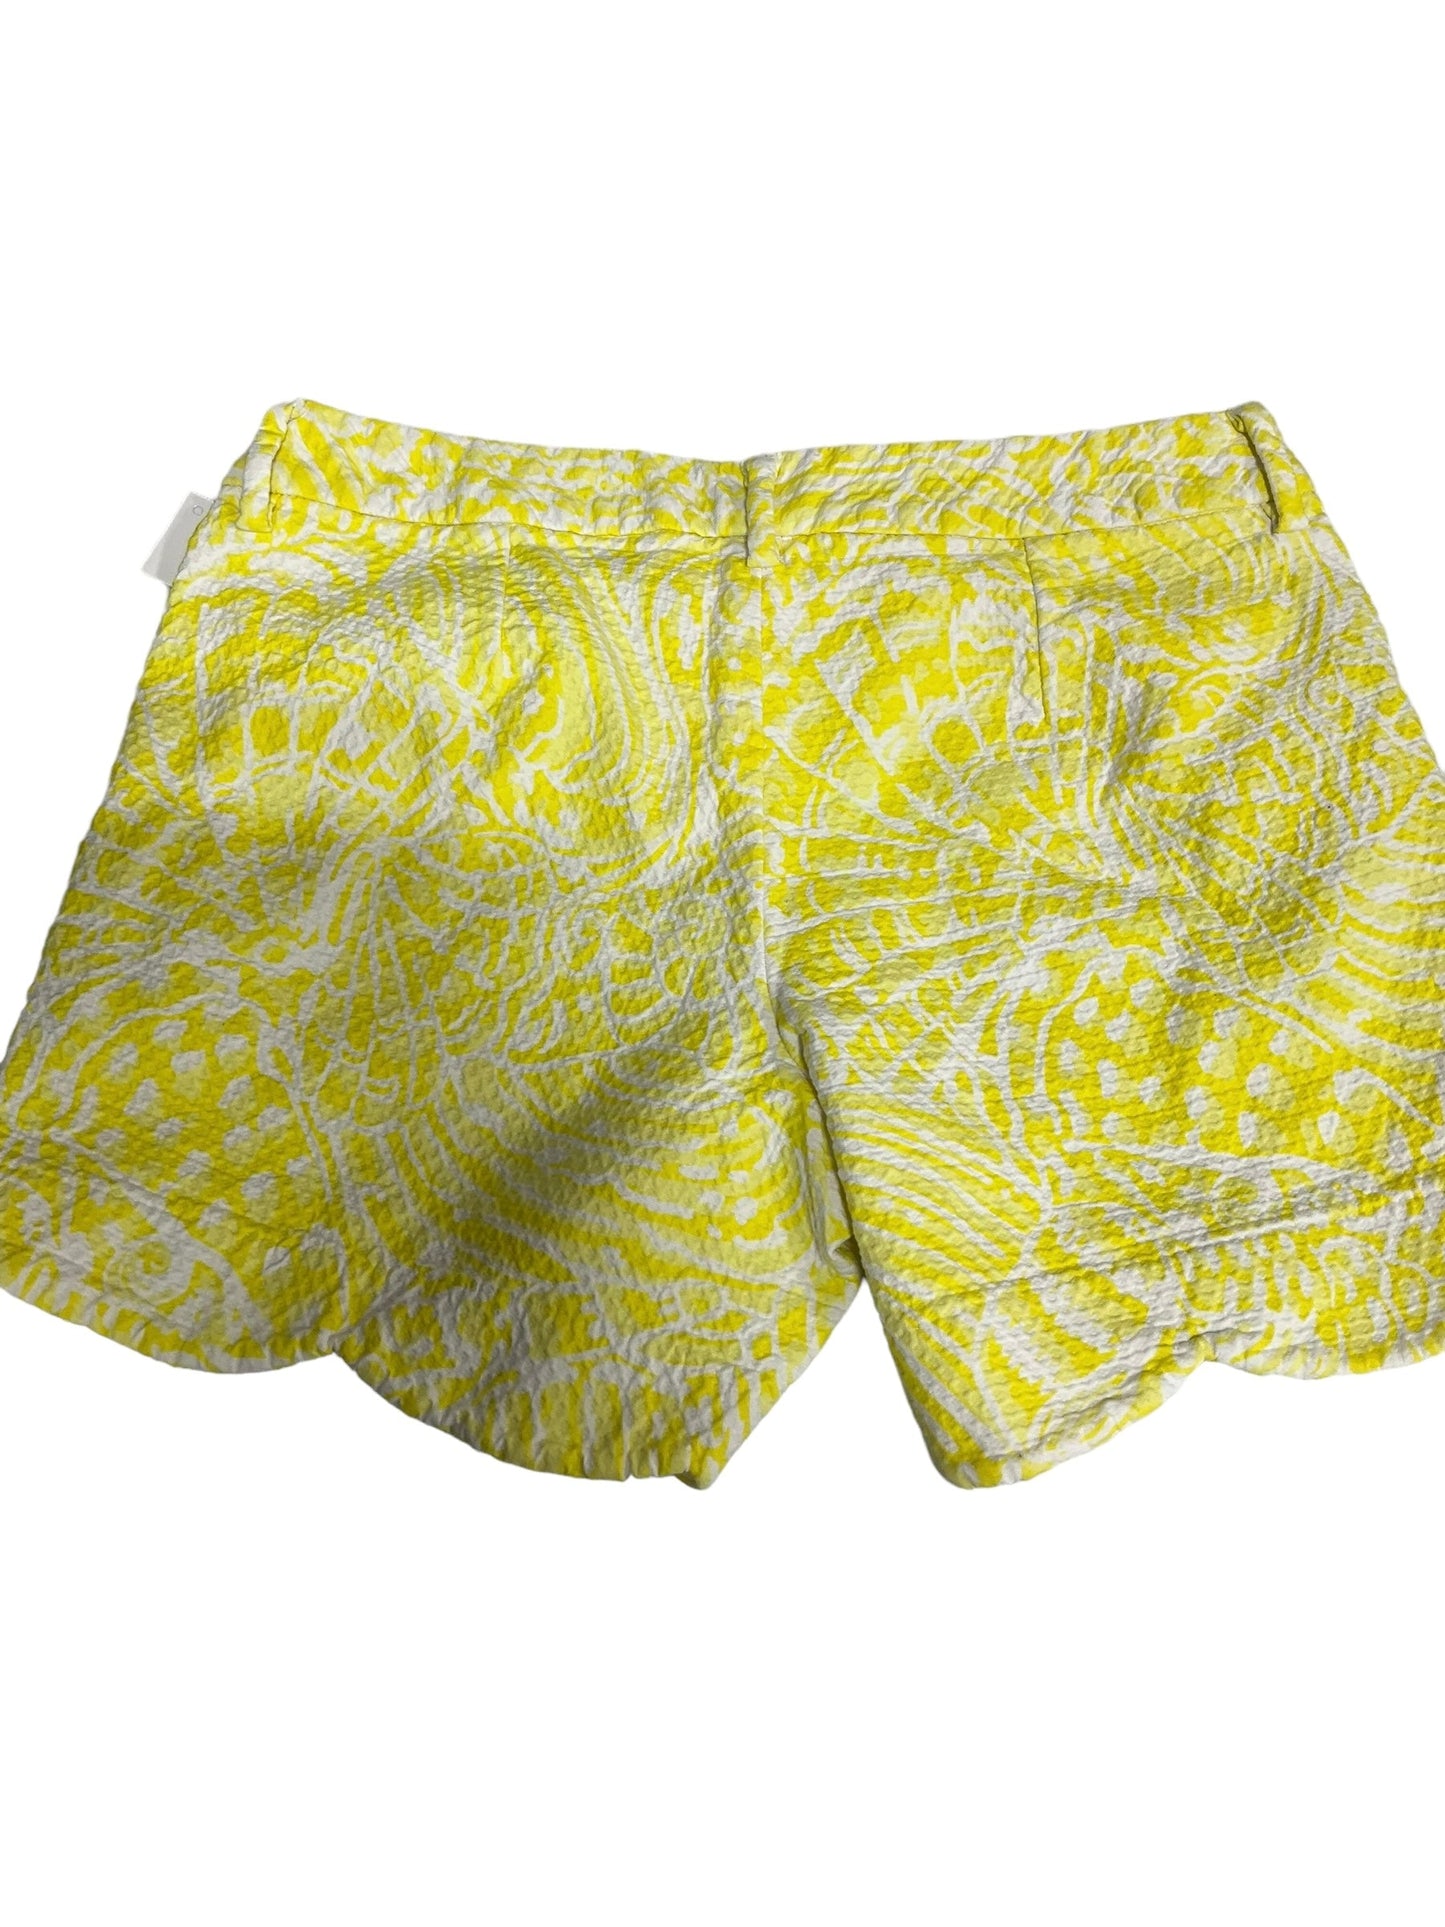 Yellow Shorts Designer Lilly Pulitzer, Size 0